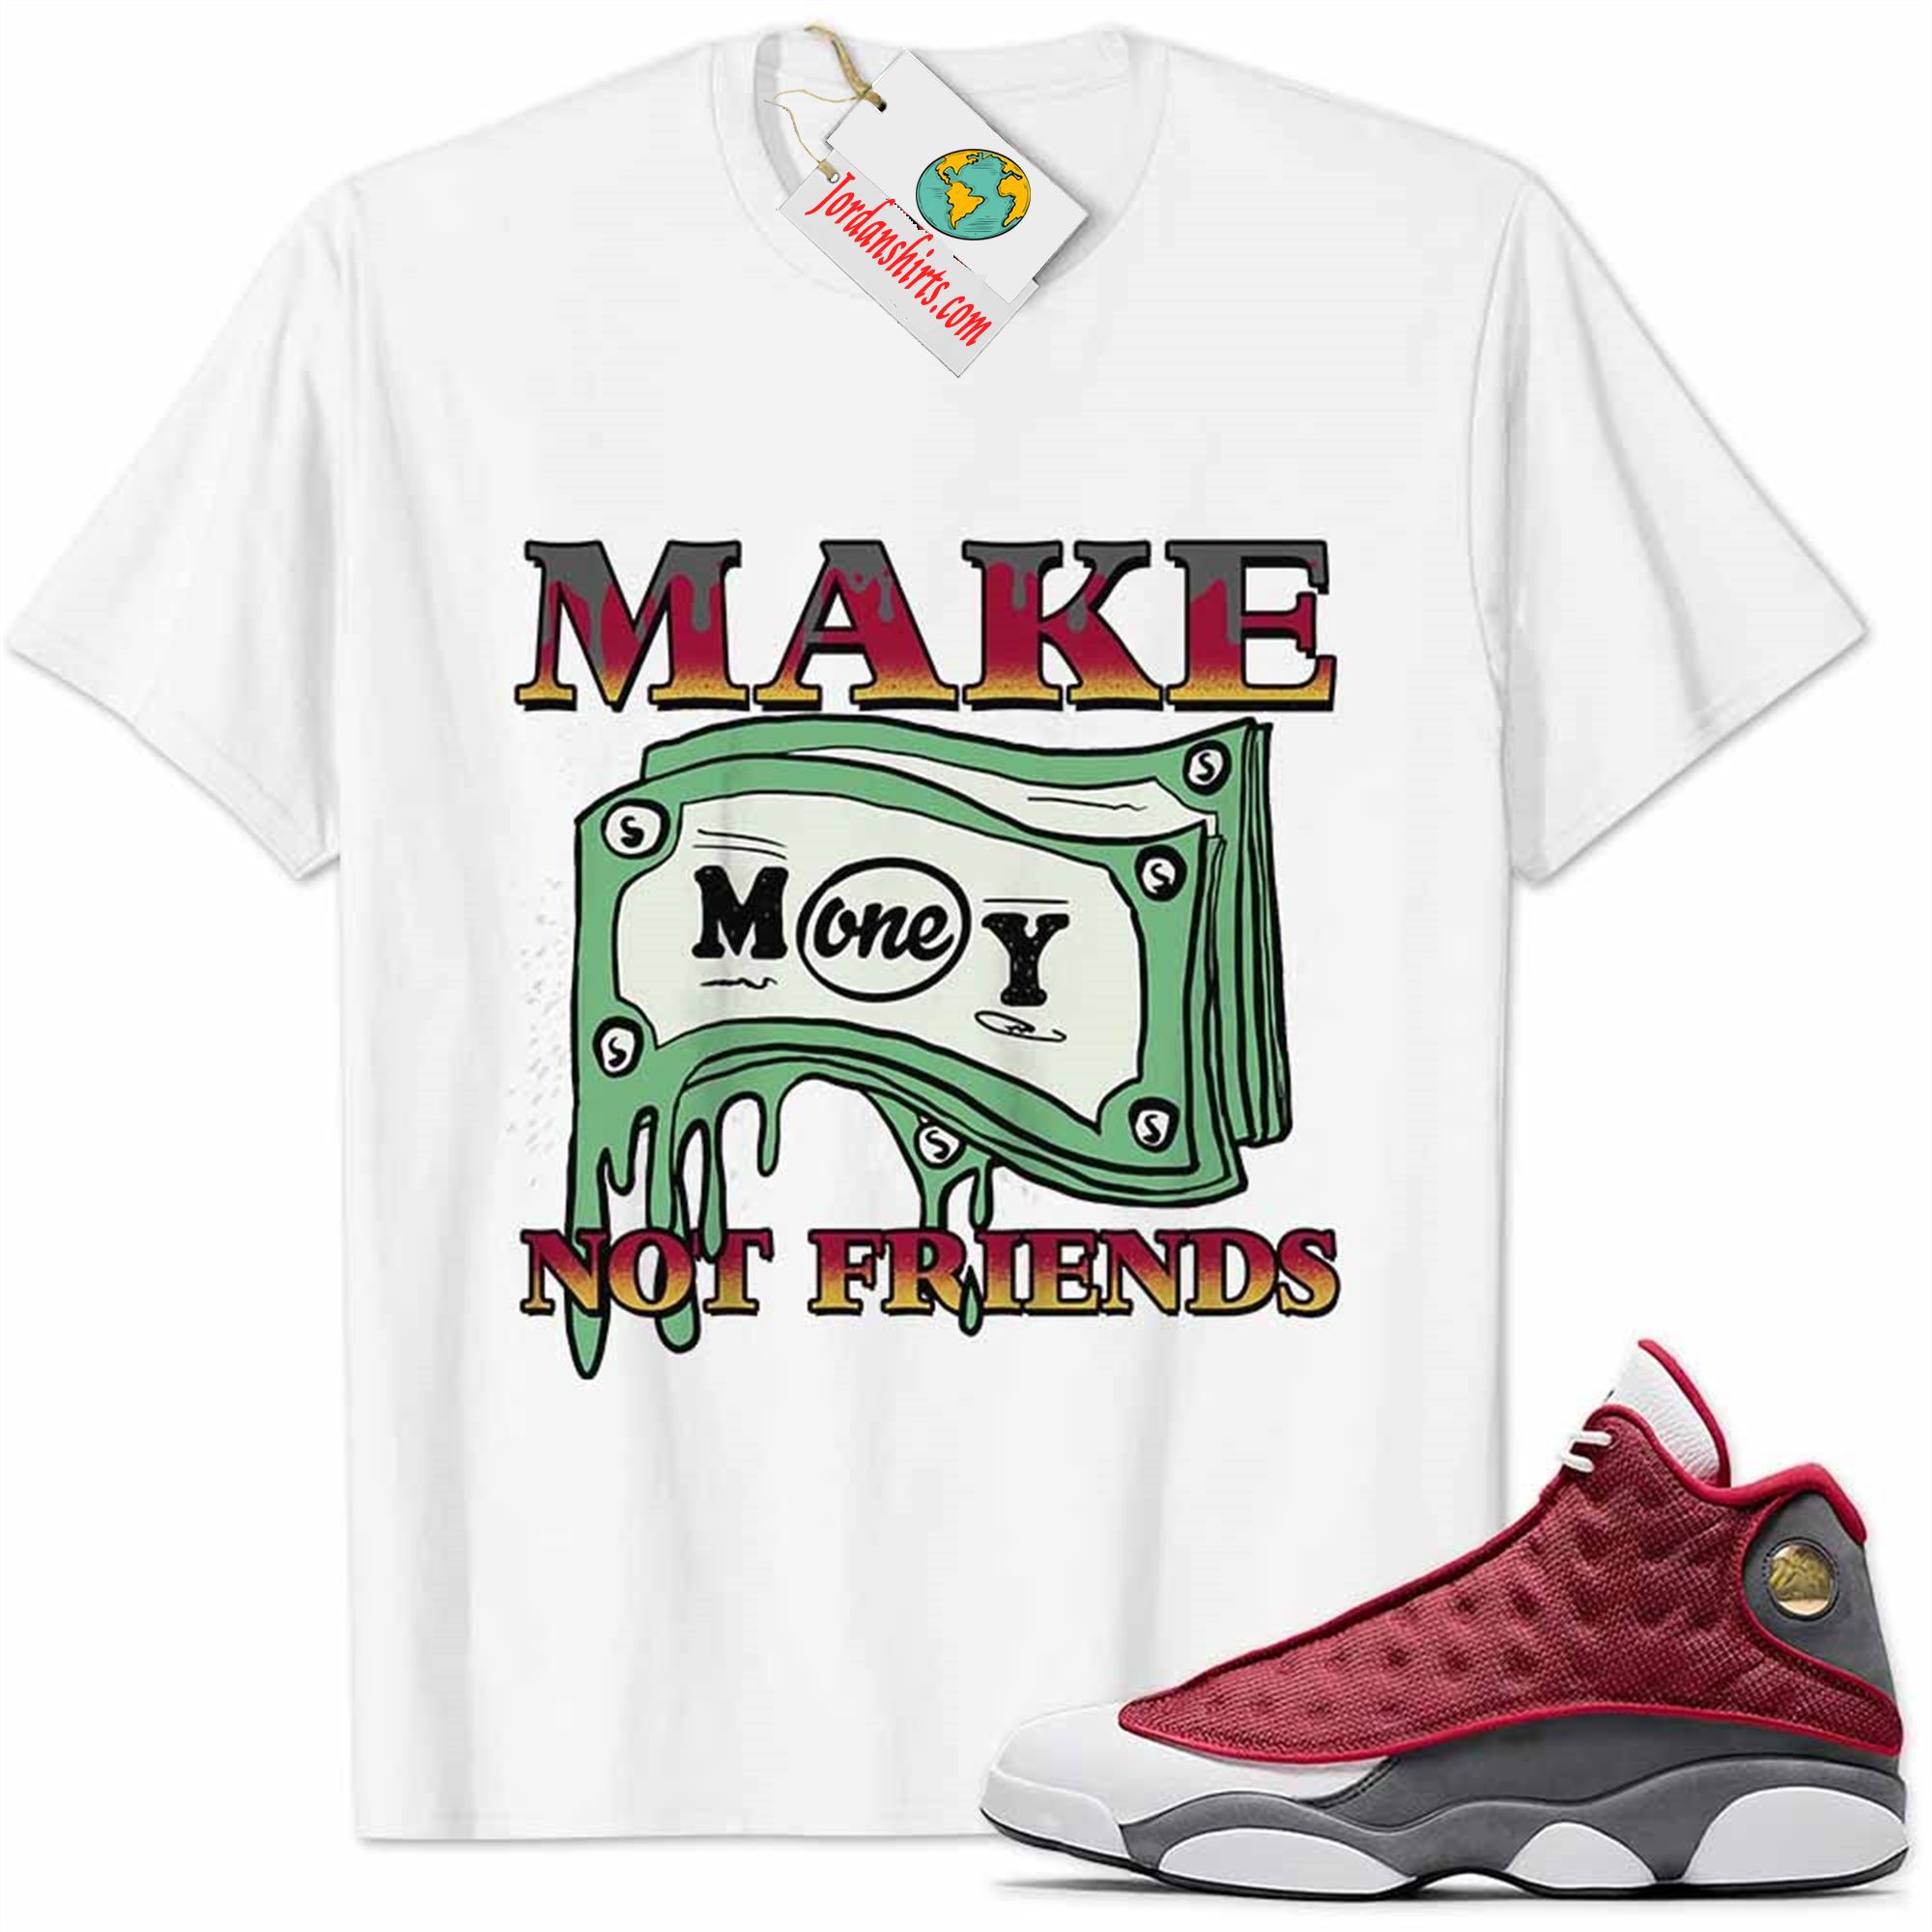 Jordan 13 Shirt, Jordan 13 Red Flint Shirt Make Money Graffiti White Full Size Up To 5xl